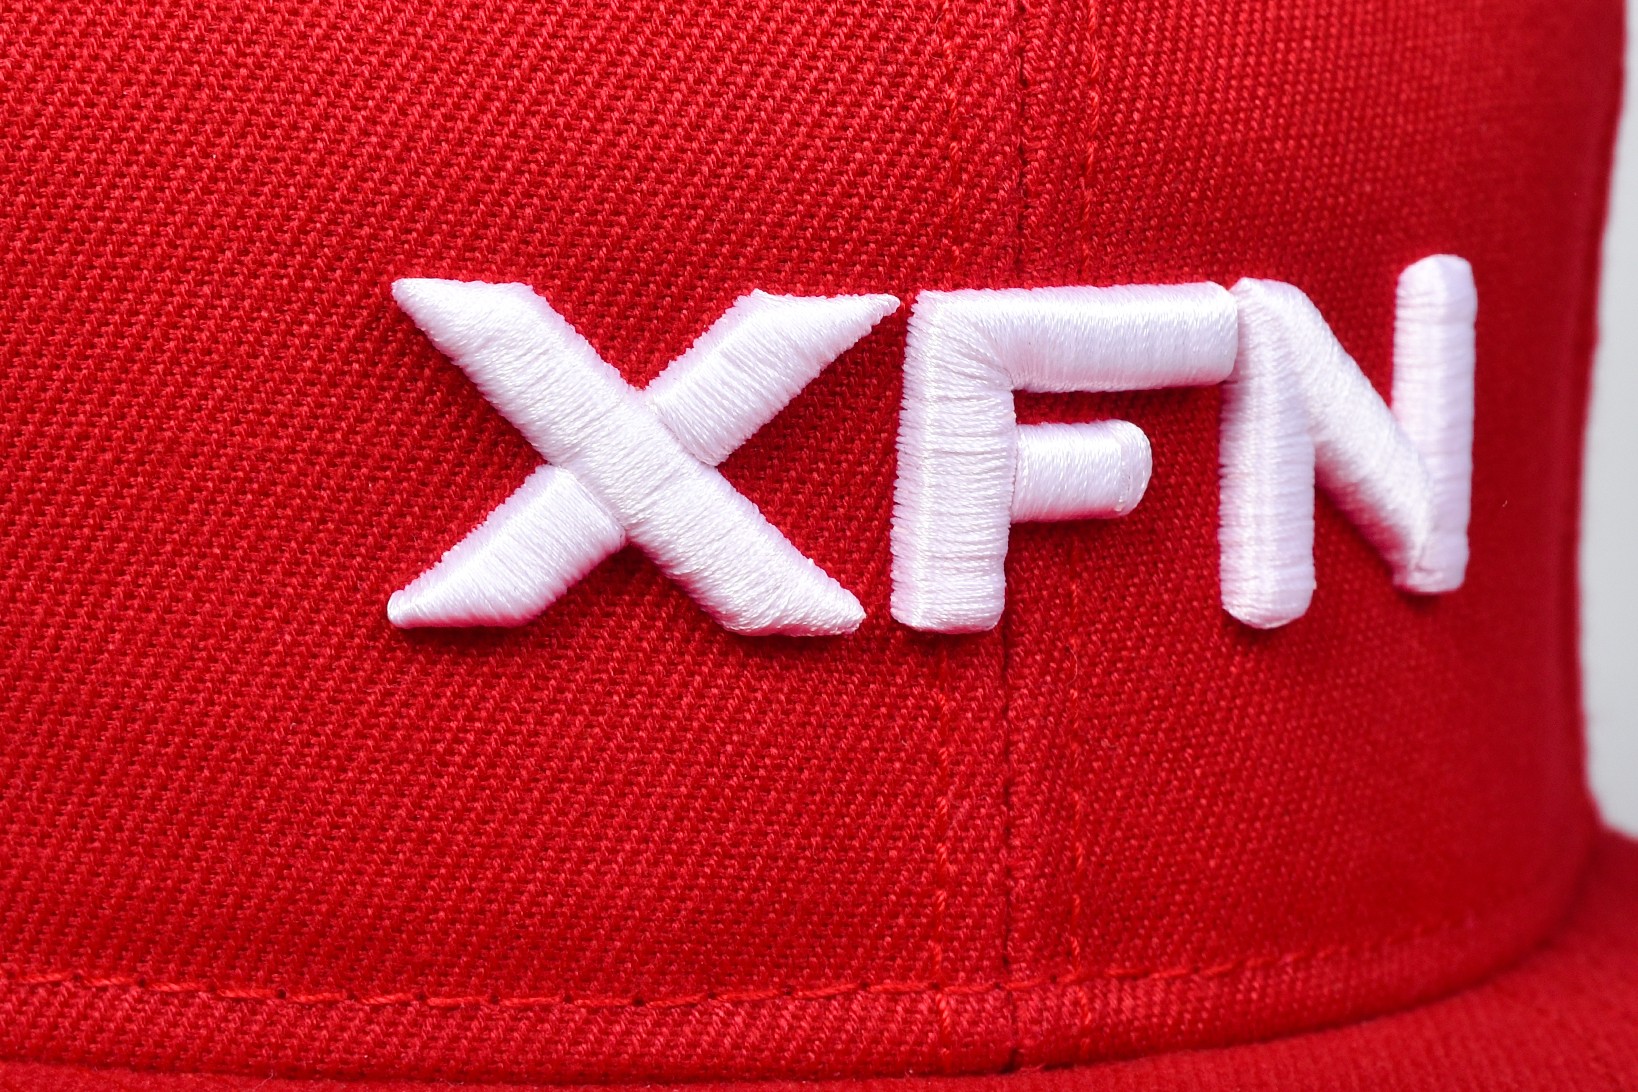 XFN Red Cap